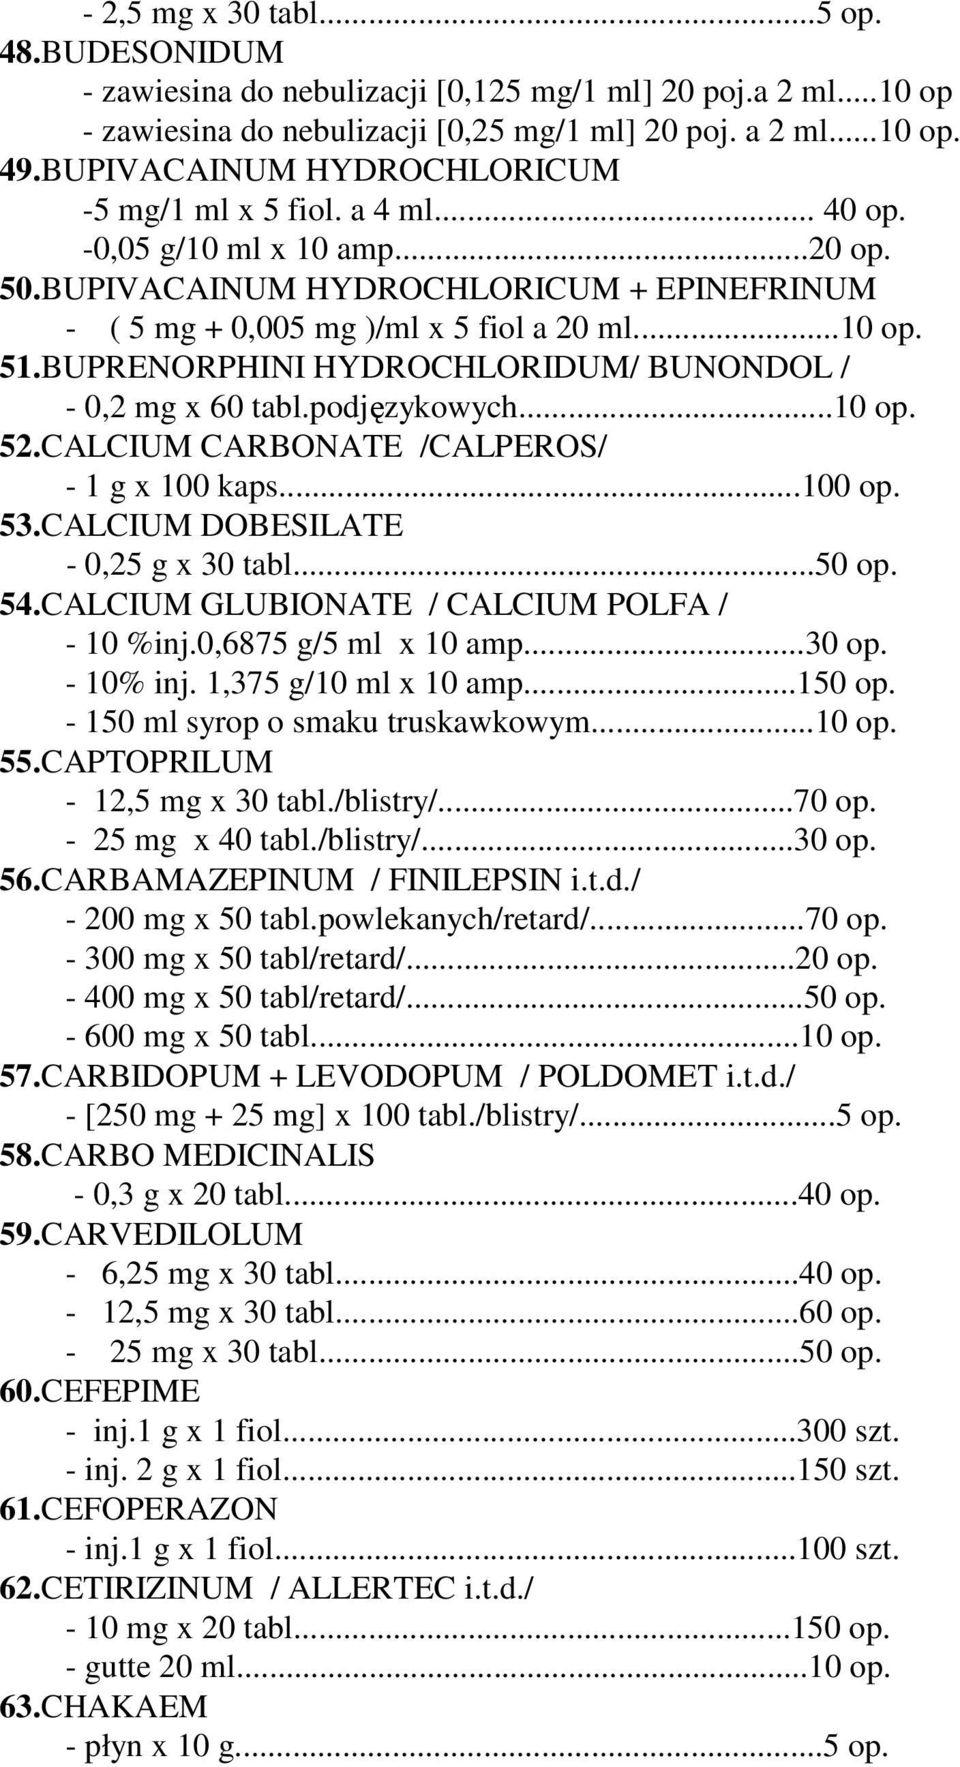 BUPRENORPHINI HYDROCHLORIDUM/ BUNONDOL / - 0,2 mg x 60 tabl.podjęzykowych...10 op. 52.CALCIUM CARBONATE /CALPEROS/ - 1 g x 100 kaps...100 op. 53.CALCIUM DOBESILATE - 0,25 g x 30 tabl...50 op. 54.